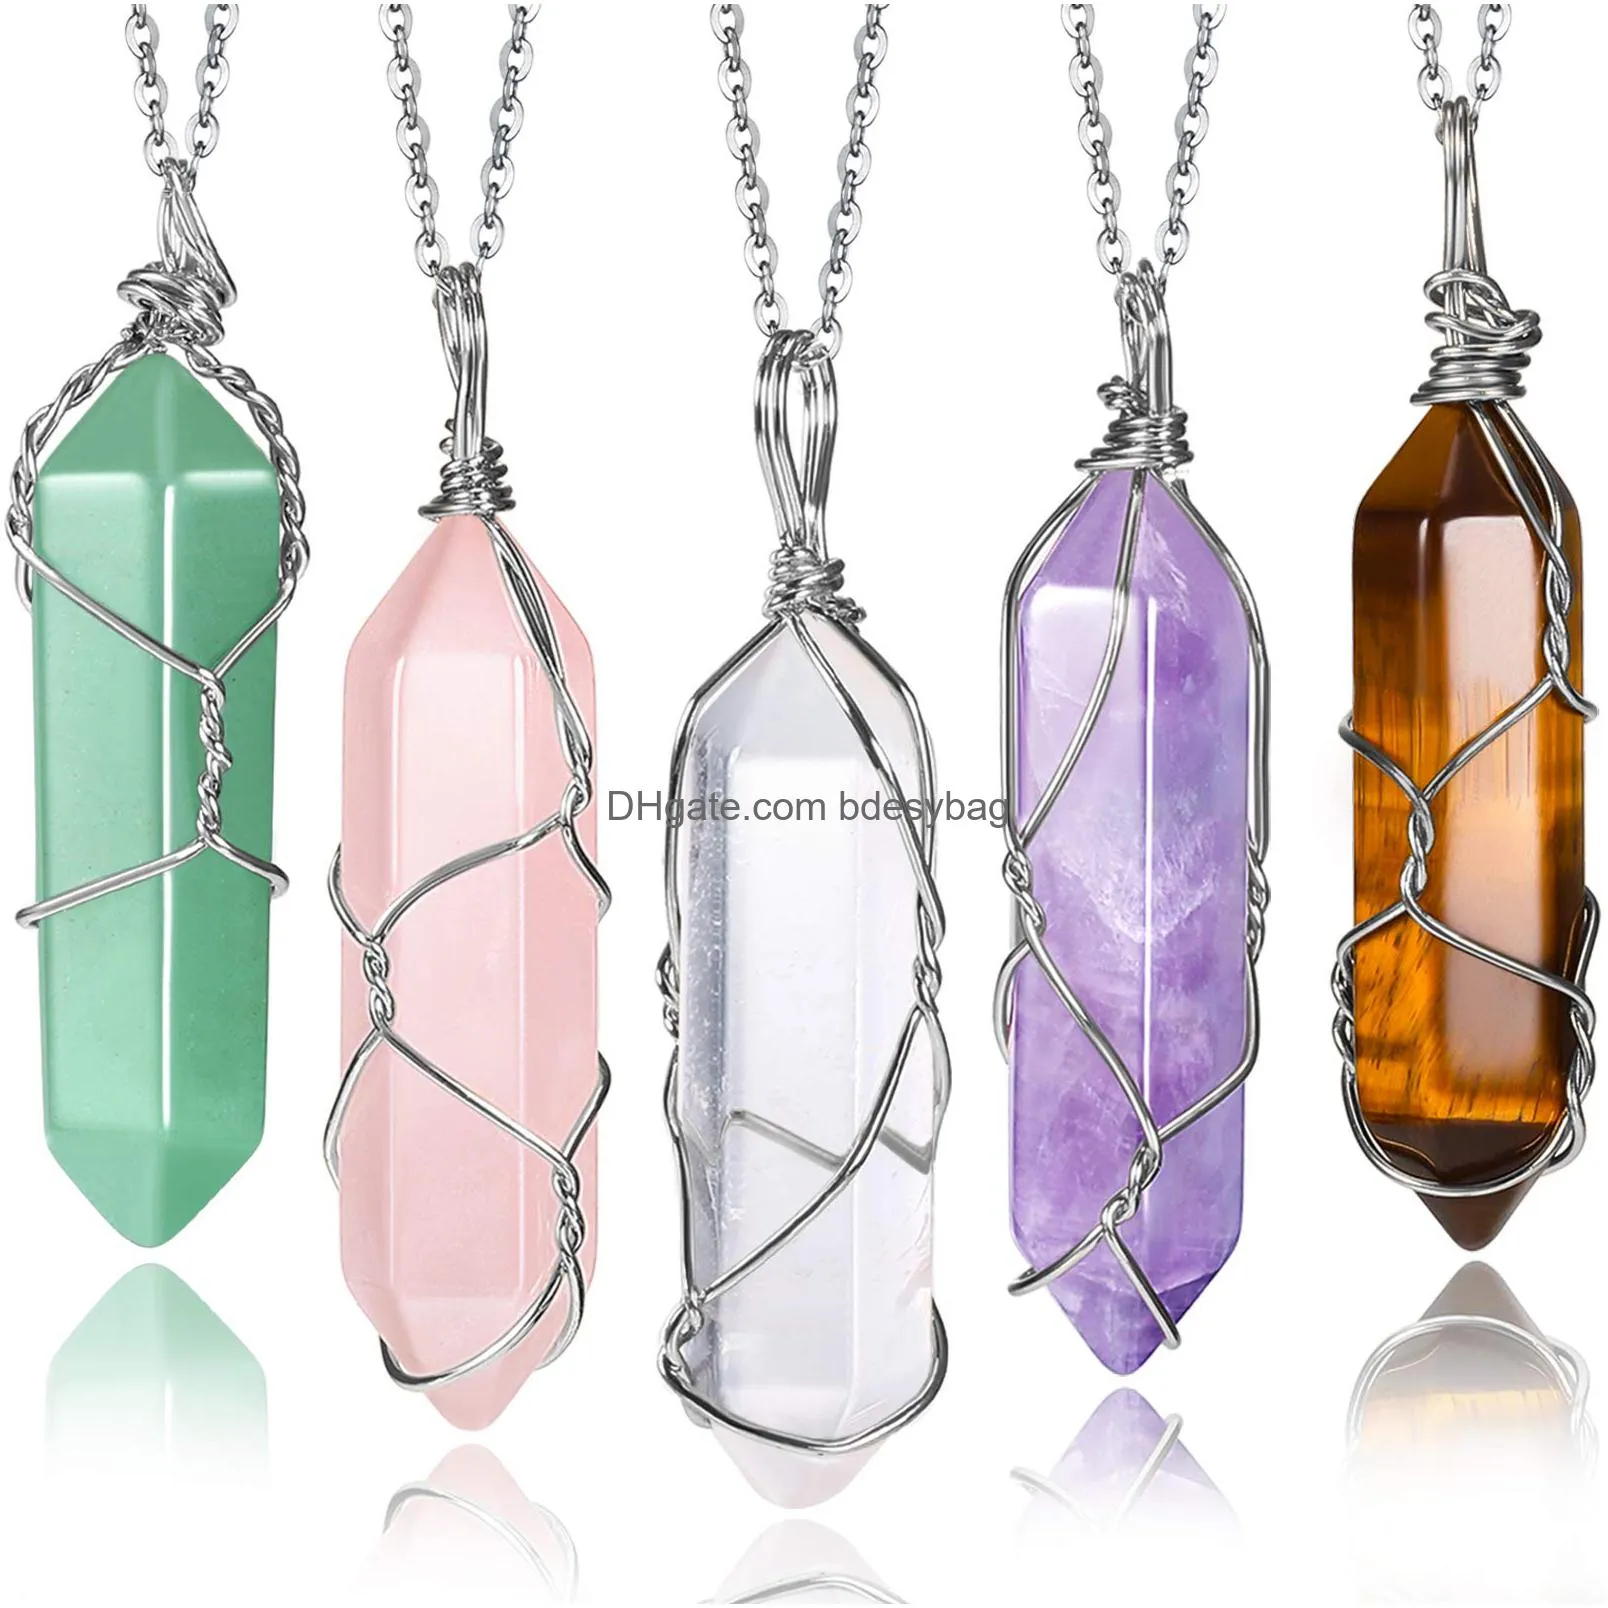 hexagonal crystal pendant necklace natural quartz stone pendant necklace healing crystal full wire wrap gemstone necklace for women girls elegant colors